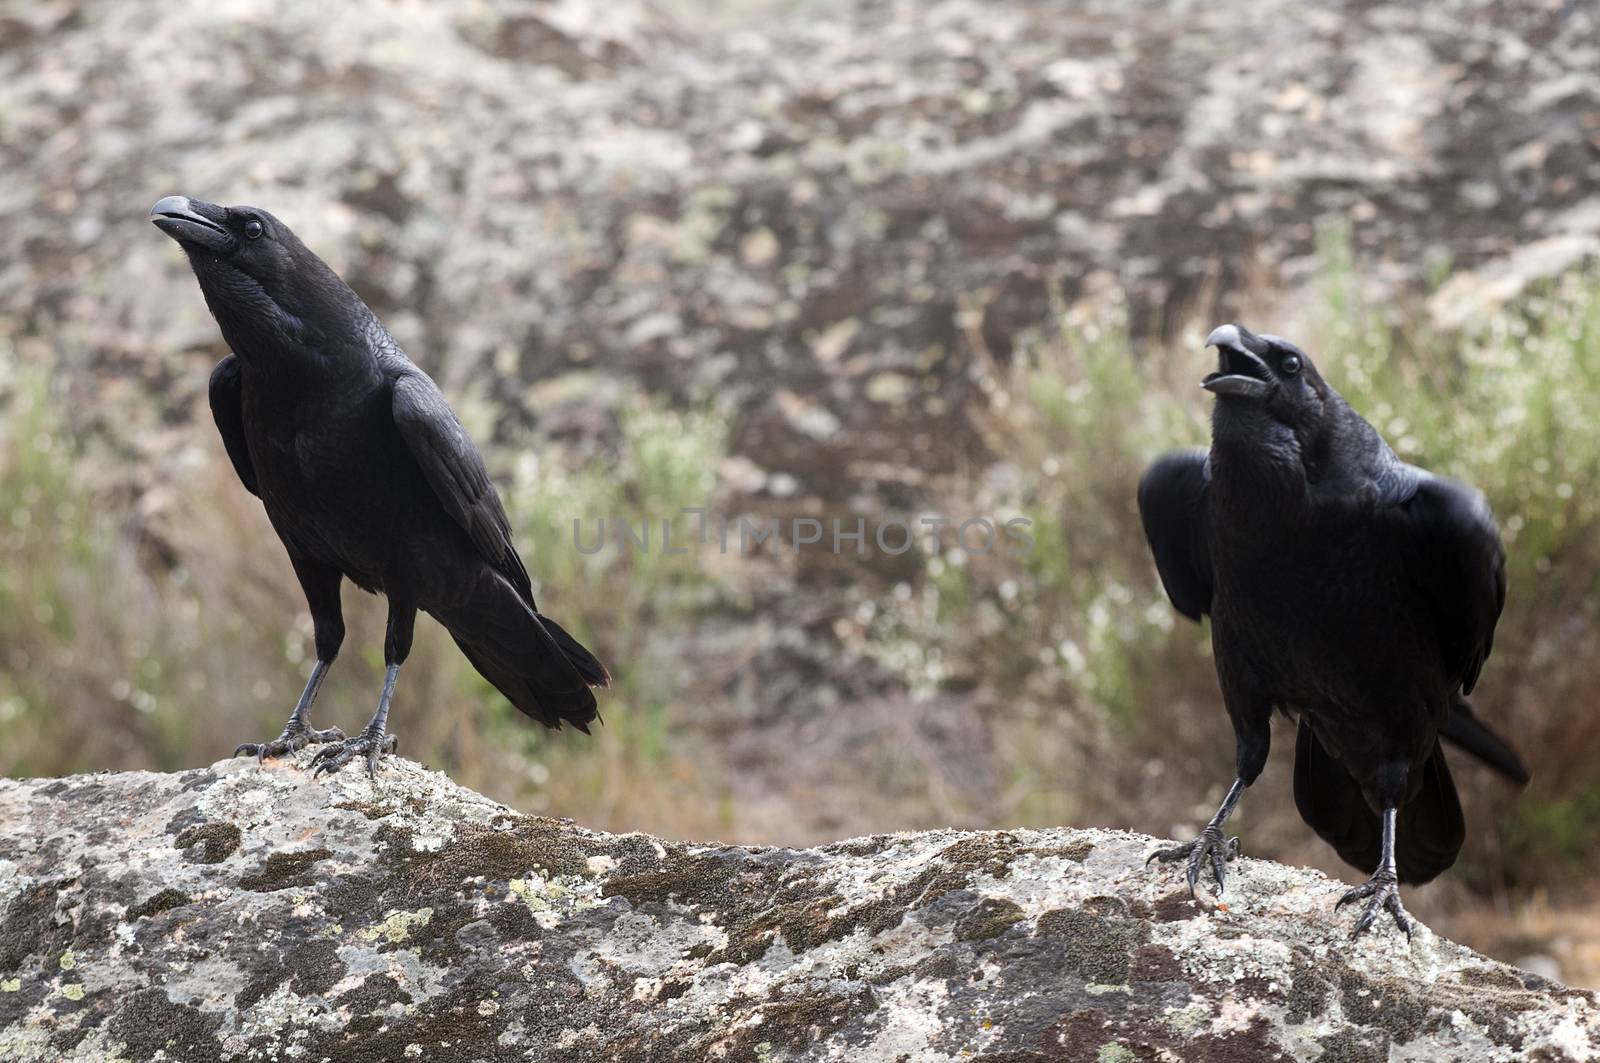 Raven - Corvus corax,   portrait and social behavior by jalonsohu@gmail.com